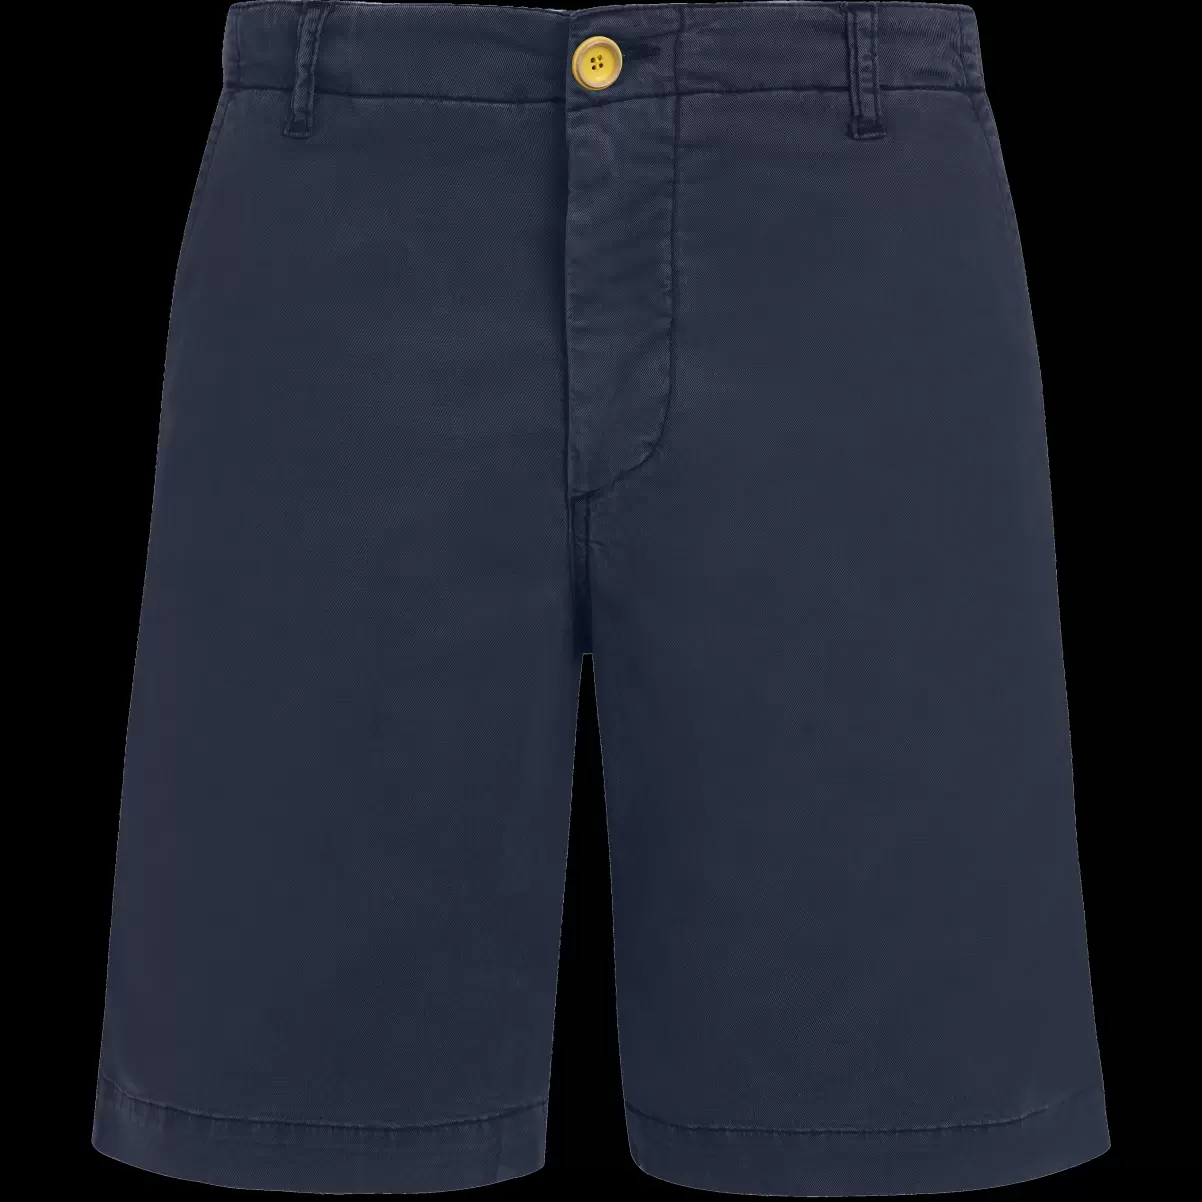 Hombre Bermudas De Color Liso Para Hombre Personalización Shorts Azul Marino / Azul Vilebrequin - 3